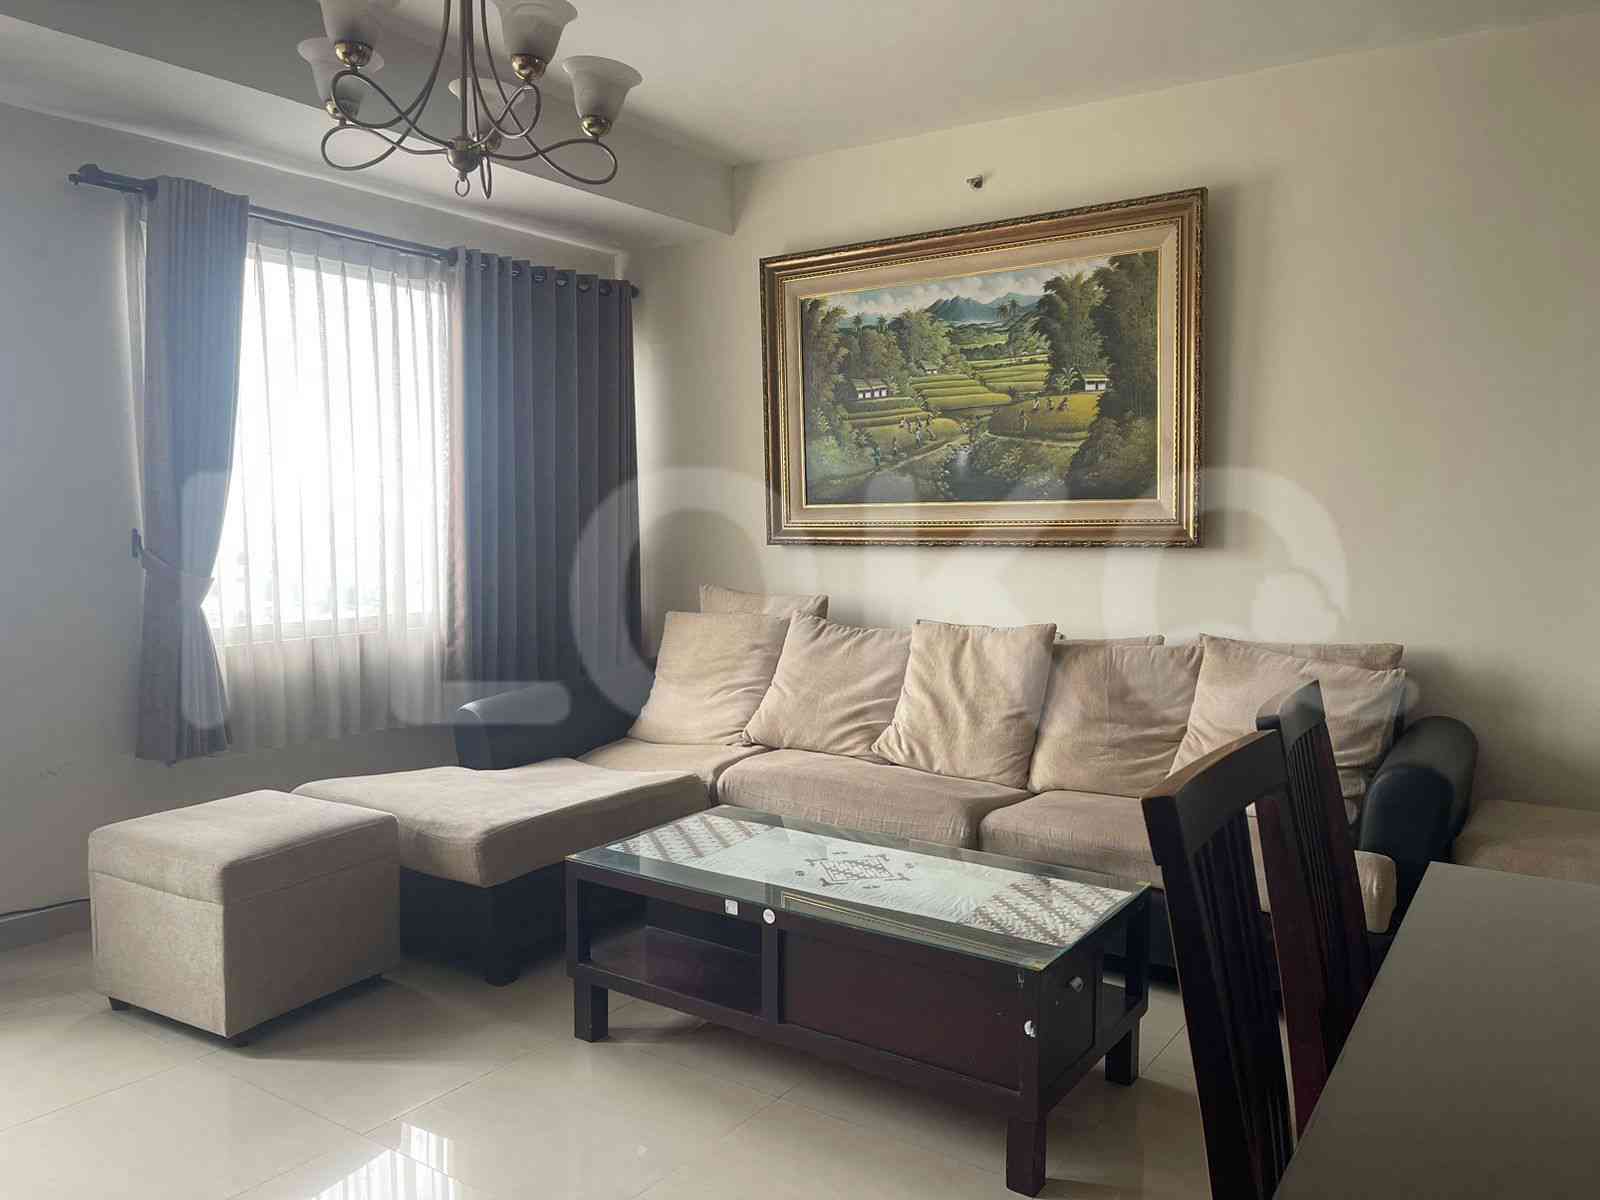 64 sqm, 21st floor, 2 BR apartment for sale in Kuningan 1